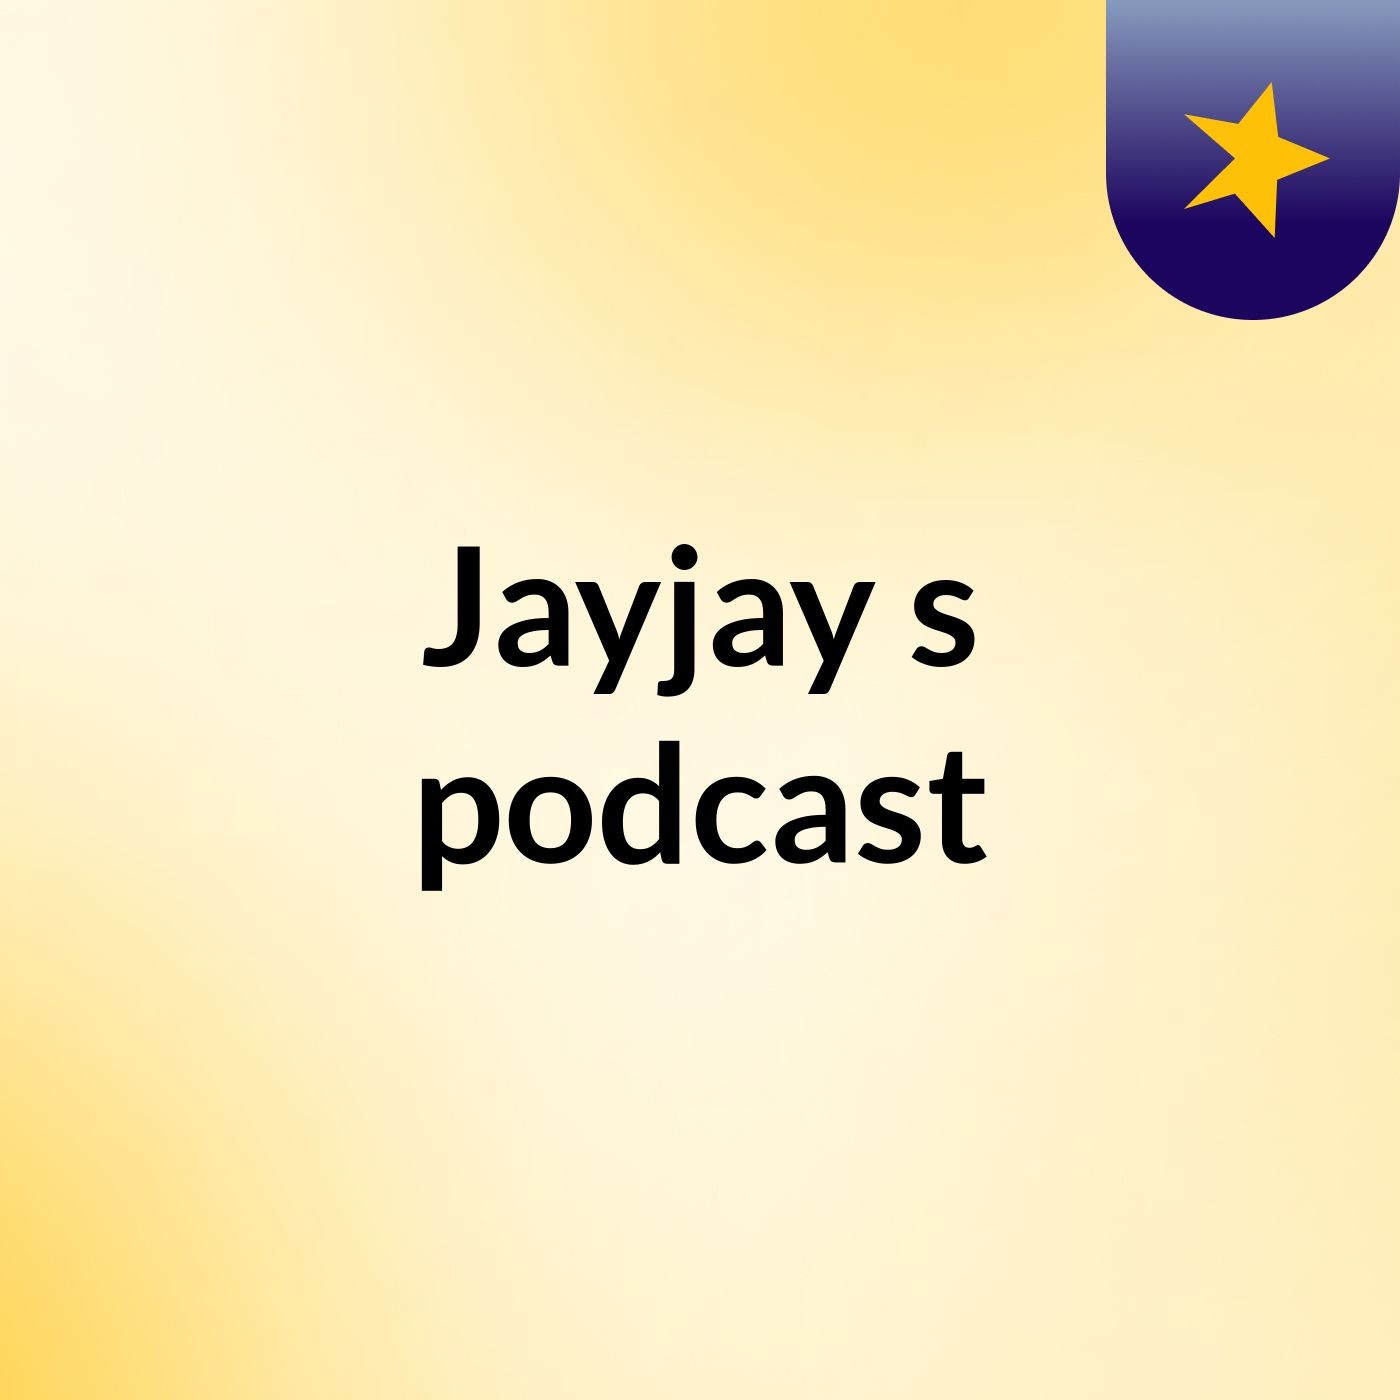 Episode 2 - Jayjay's podcast